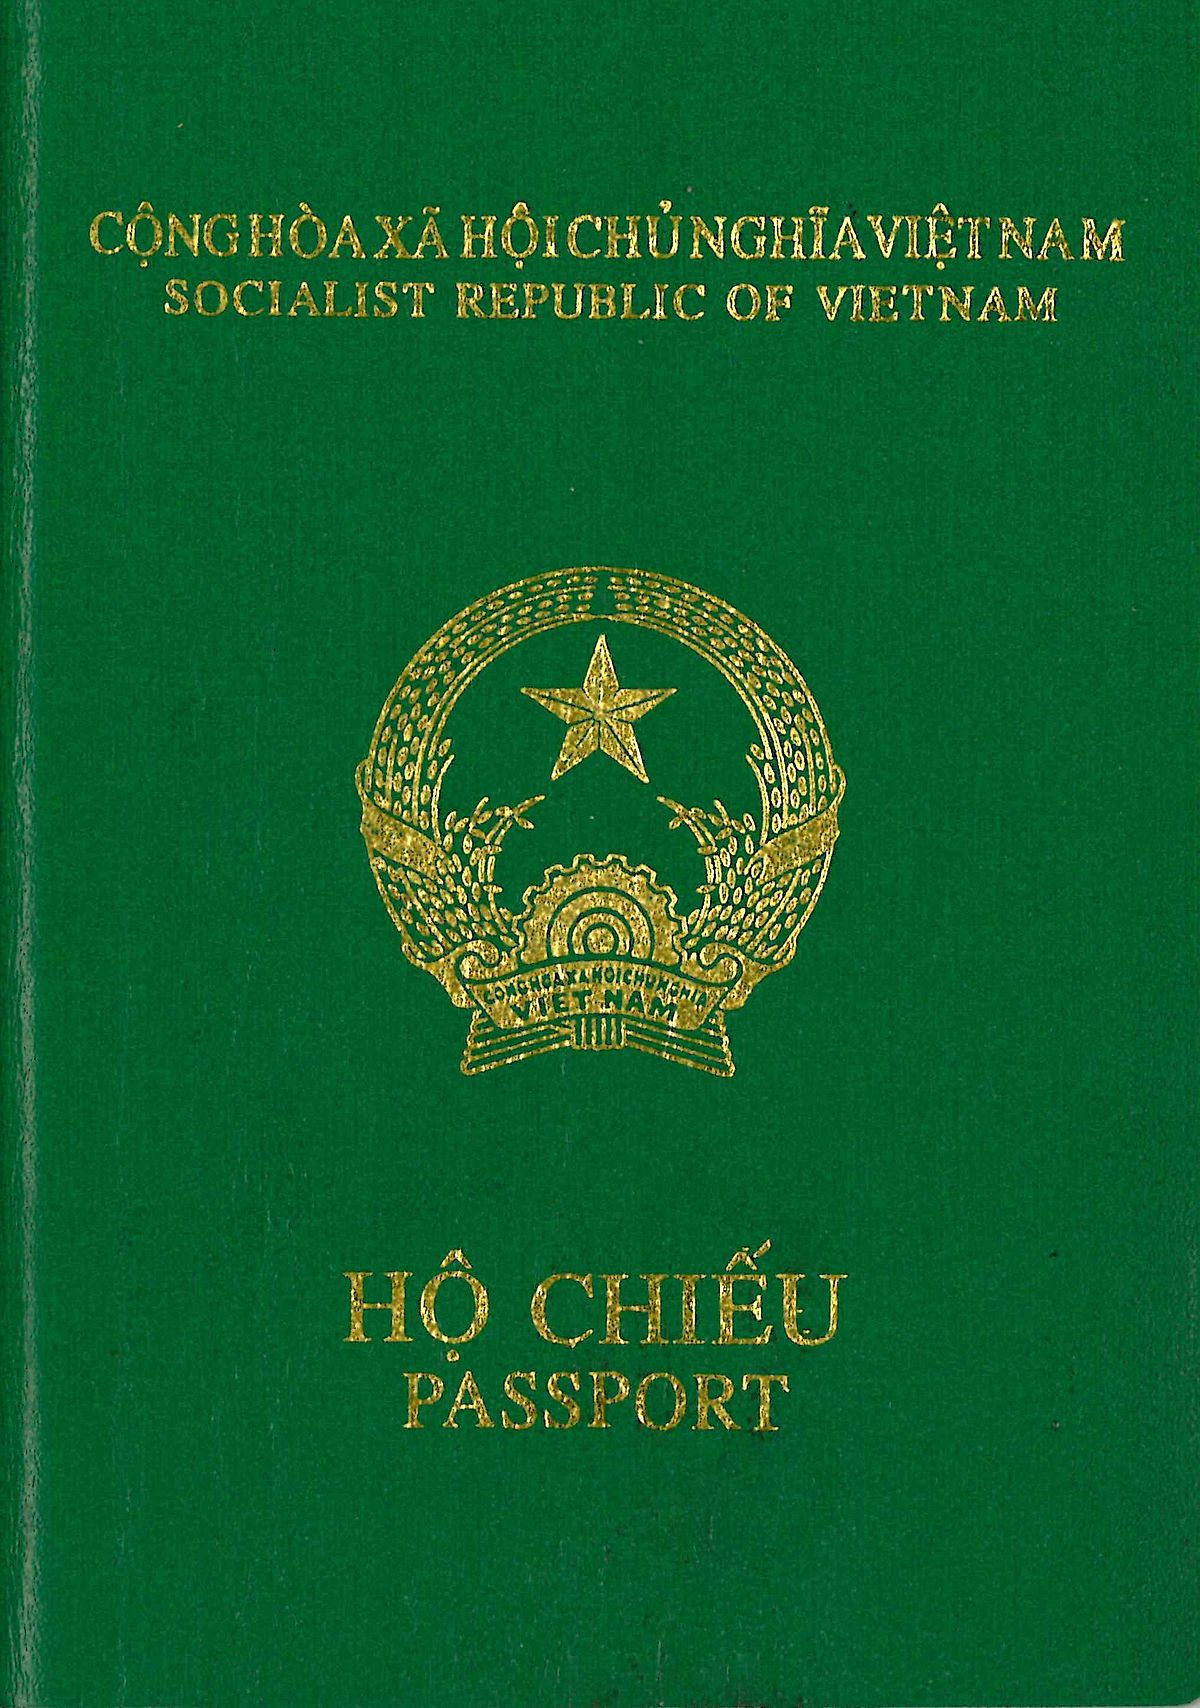 Document legalization for Vietnam